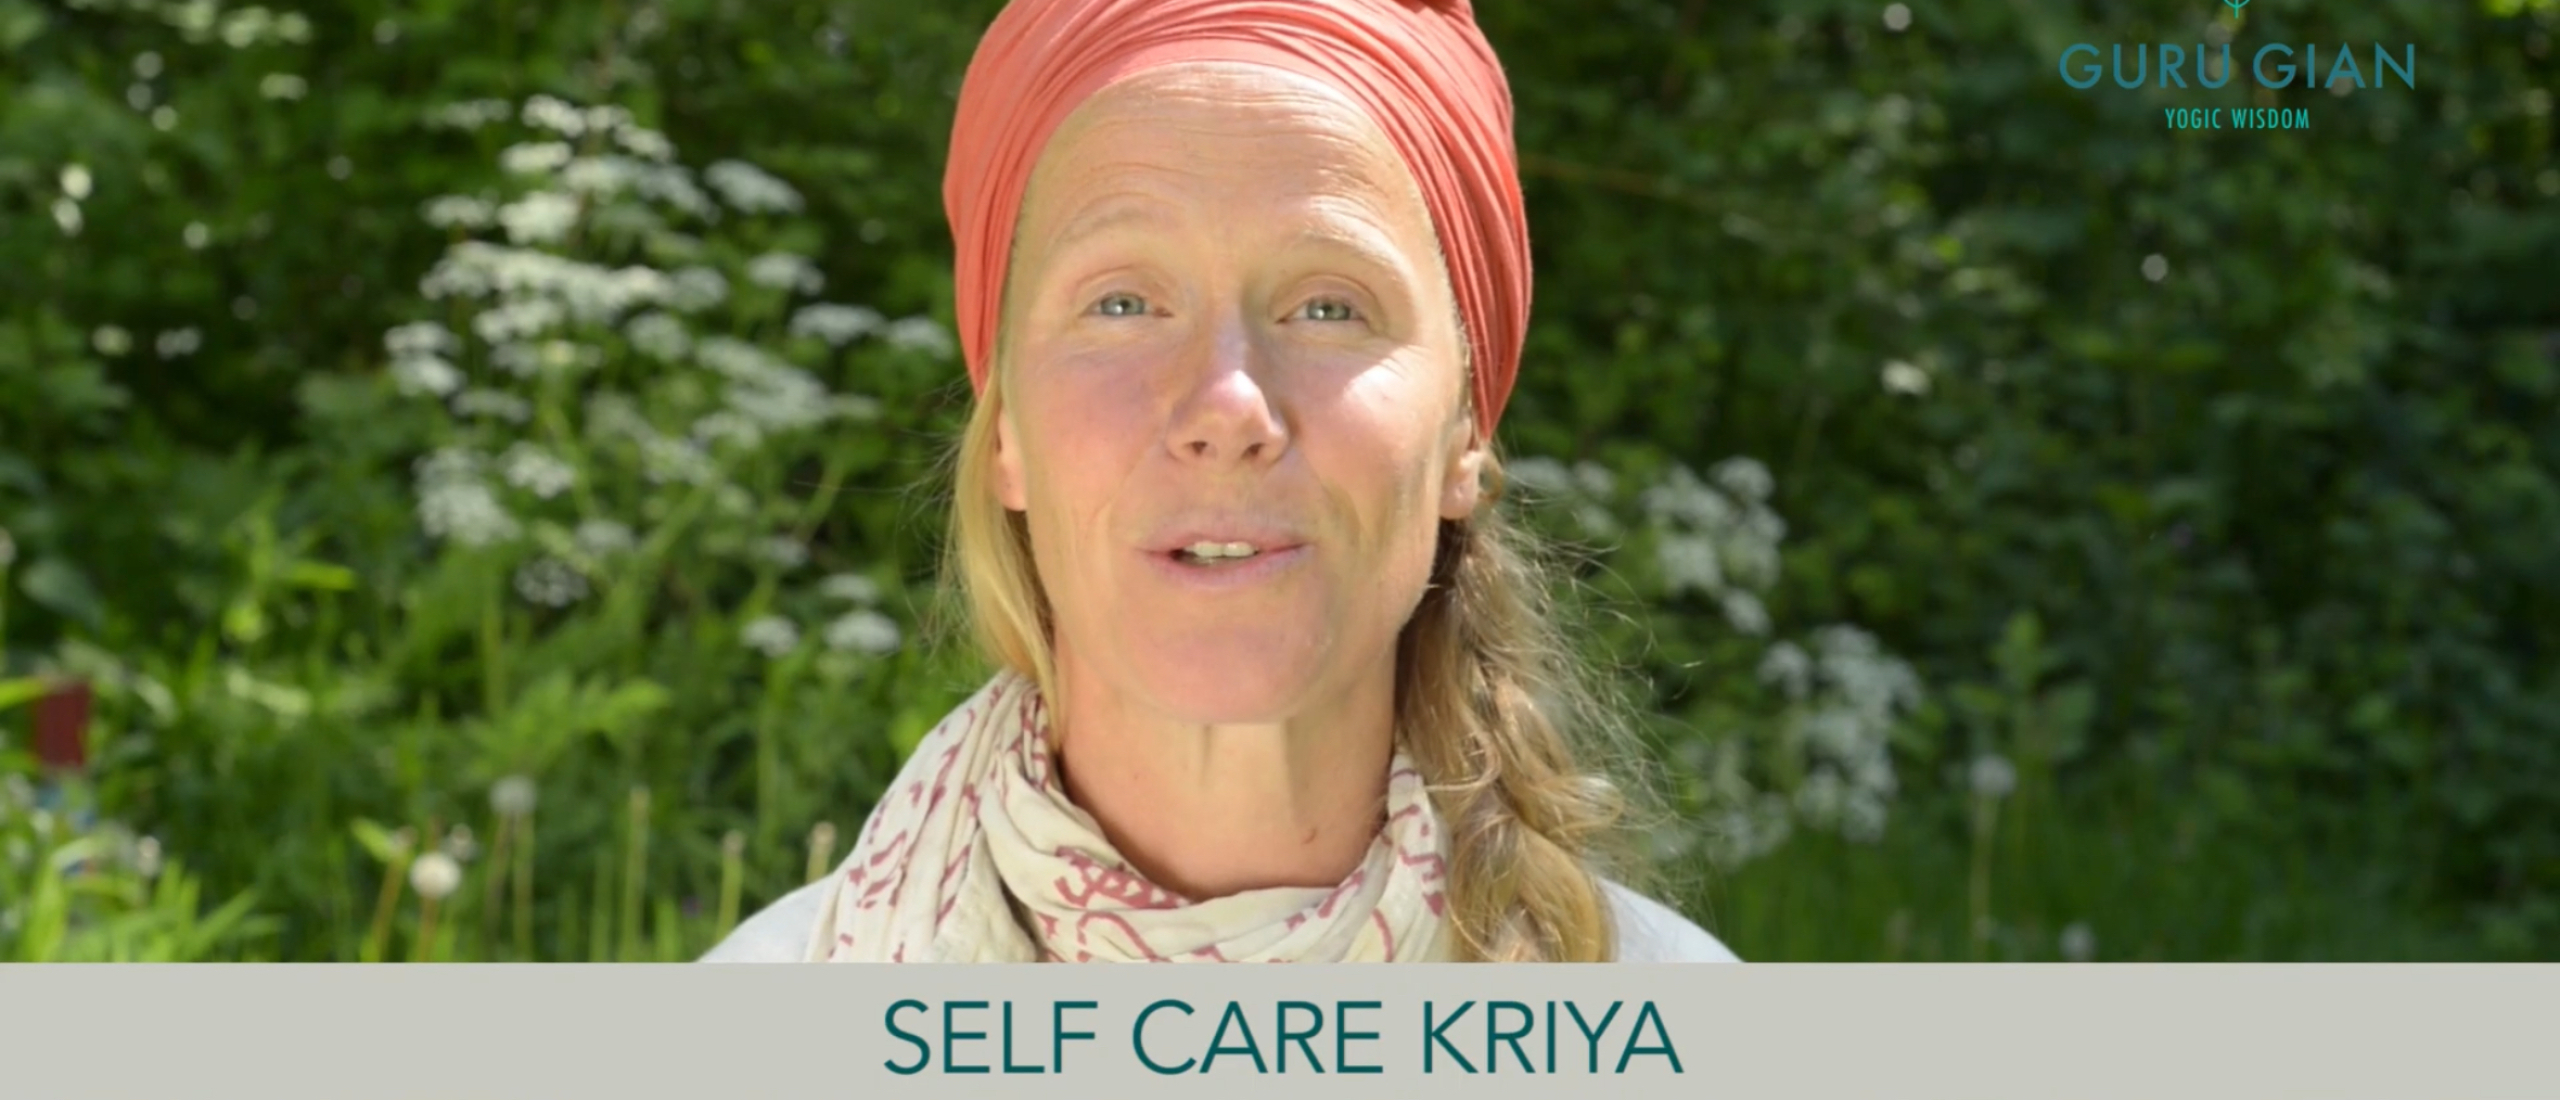 Self care kriya